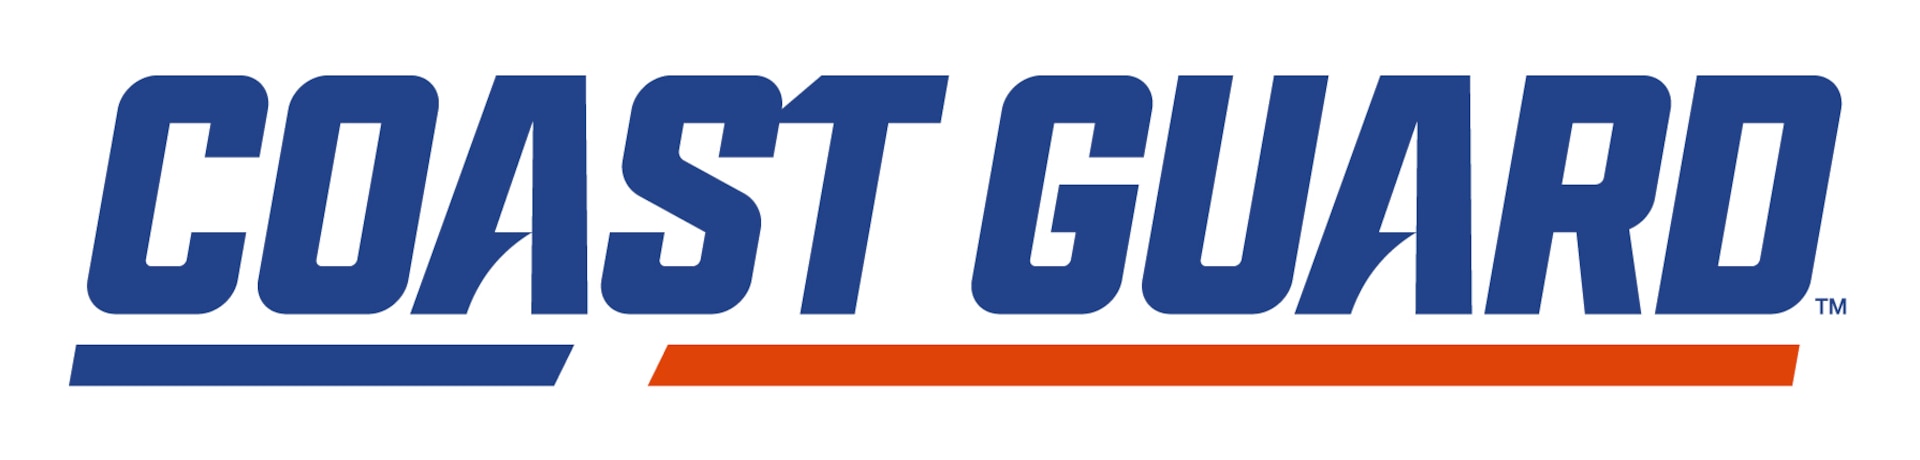 Athletics - United States Coast Guard Academy